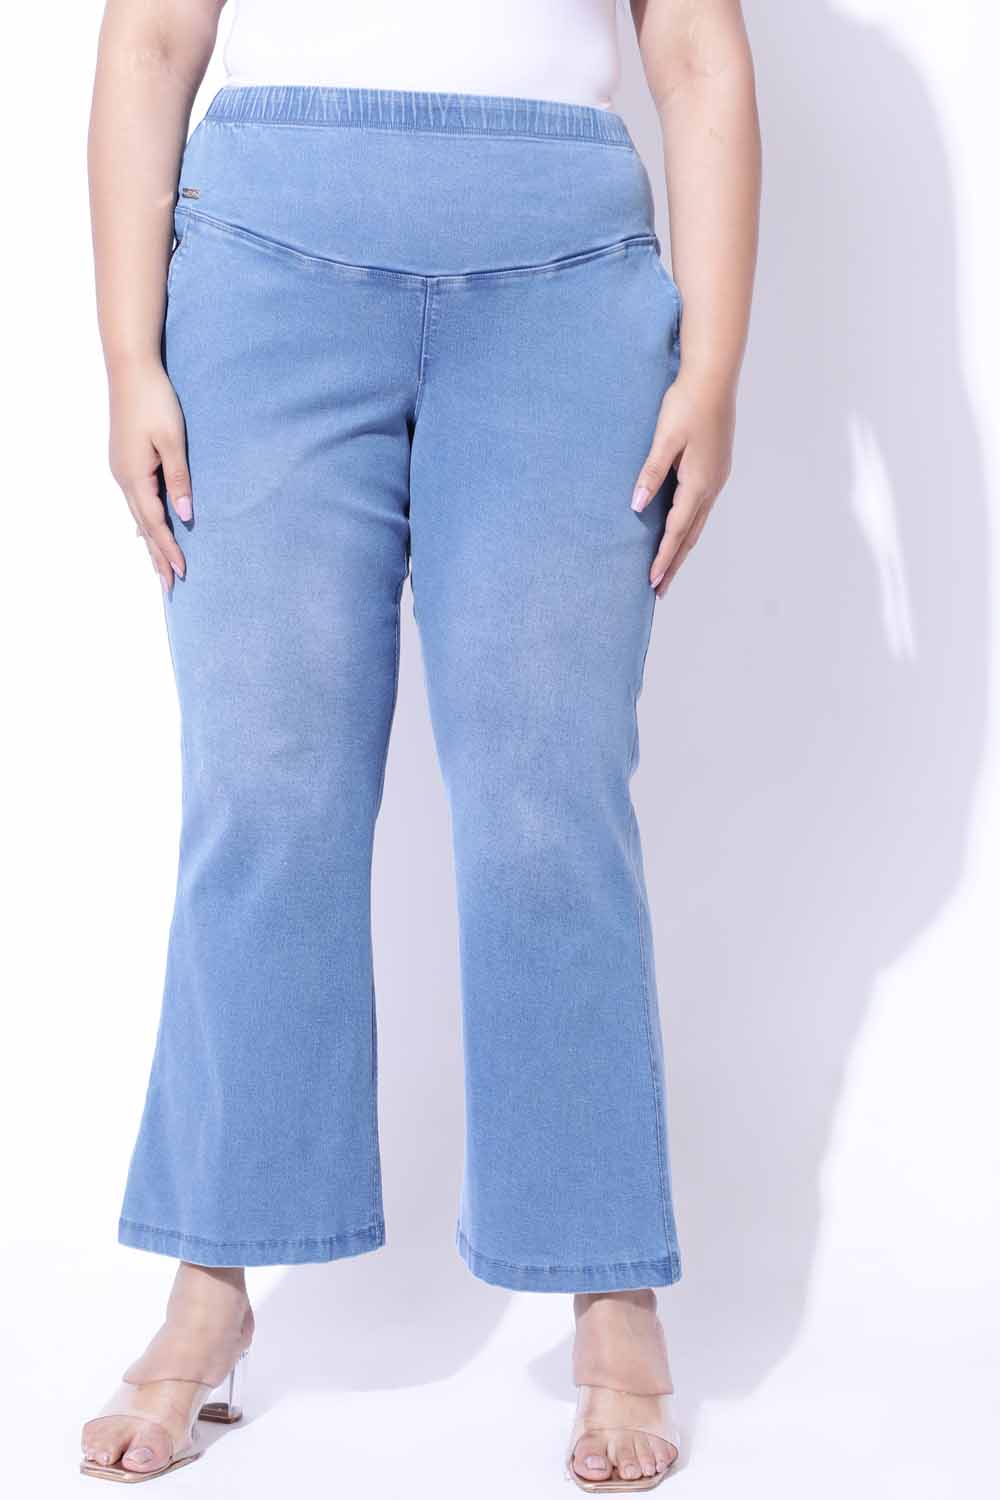 Blue Light Fade Flare Jeans